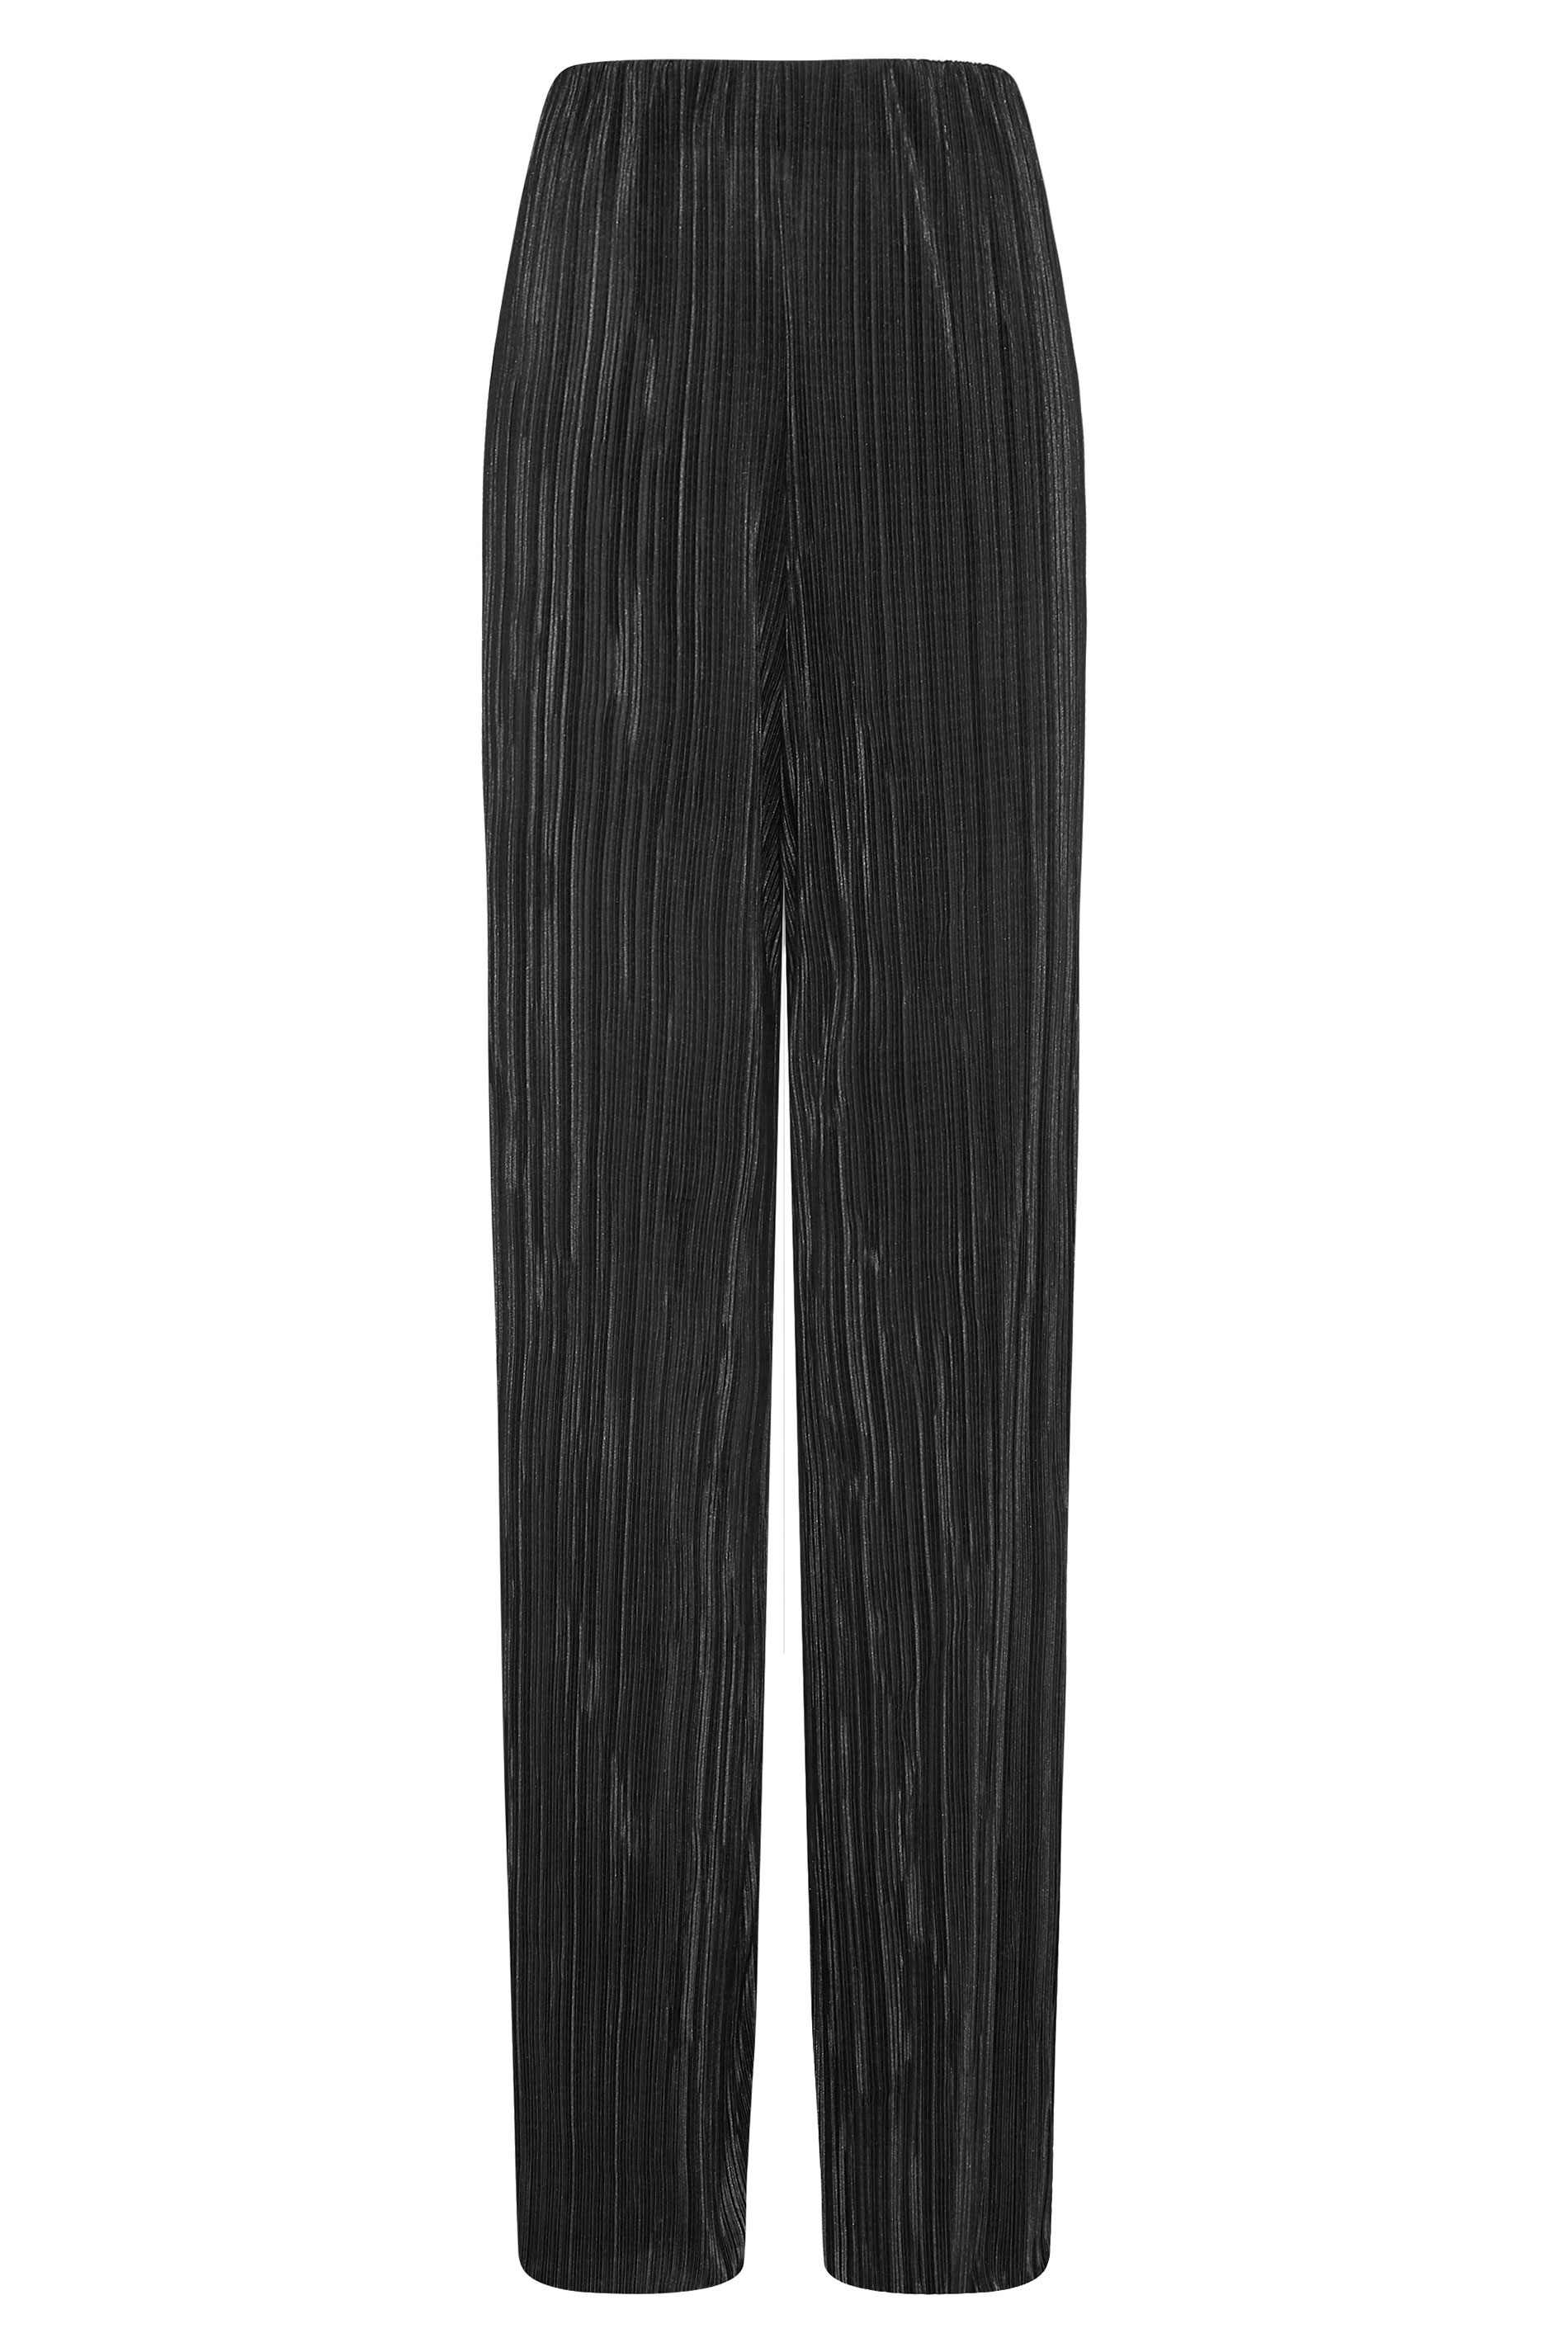 Tall Women's LTS Black Glitter Plisse Wide Leg Trousers | Long Tall Sally 2